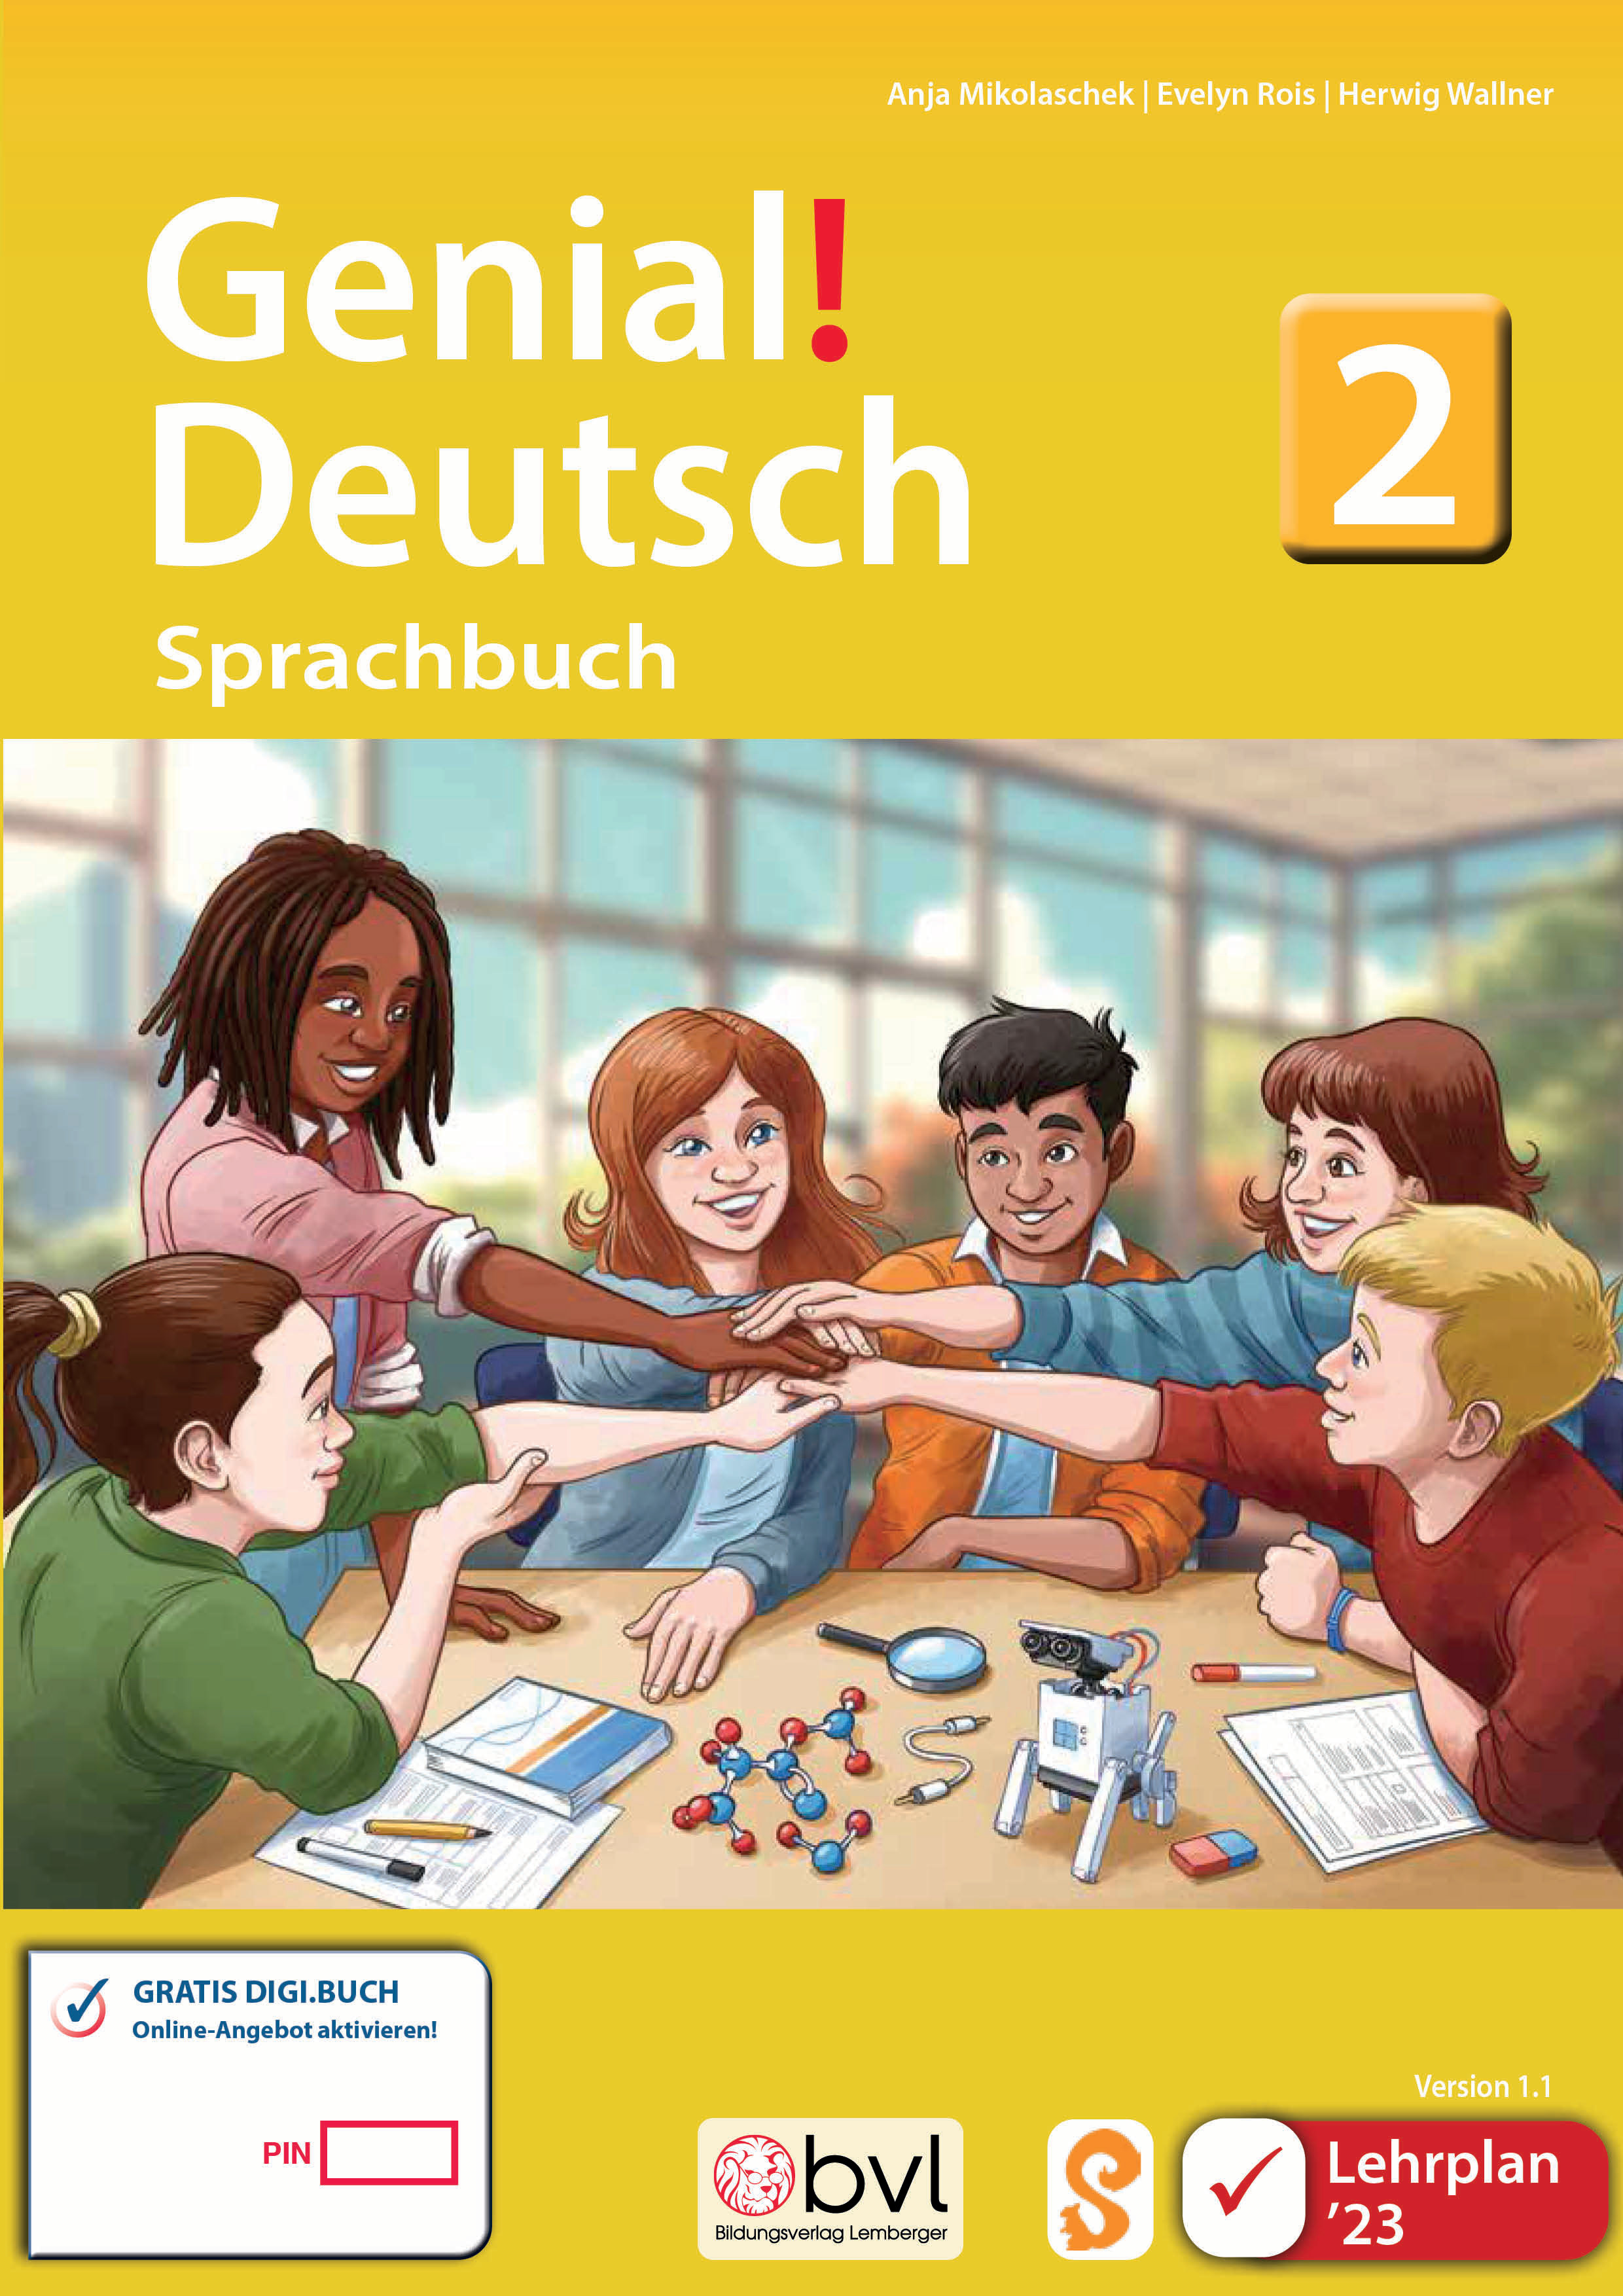 Genial! Deutsch 2 – Sprachbuch IKT LP’23 v.1.1 / Schulbuch